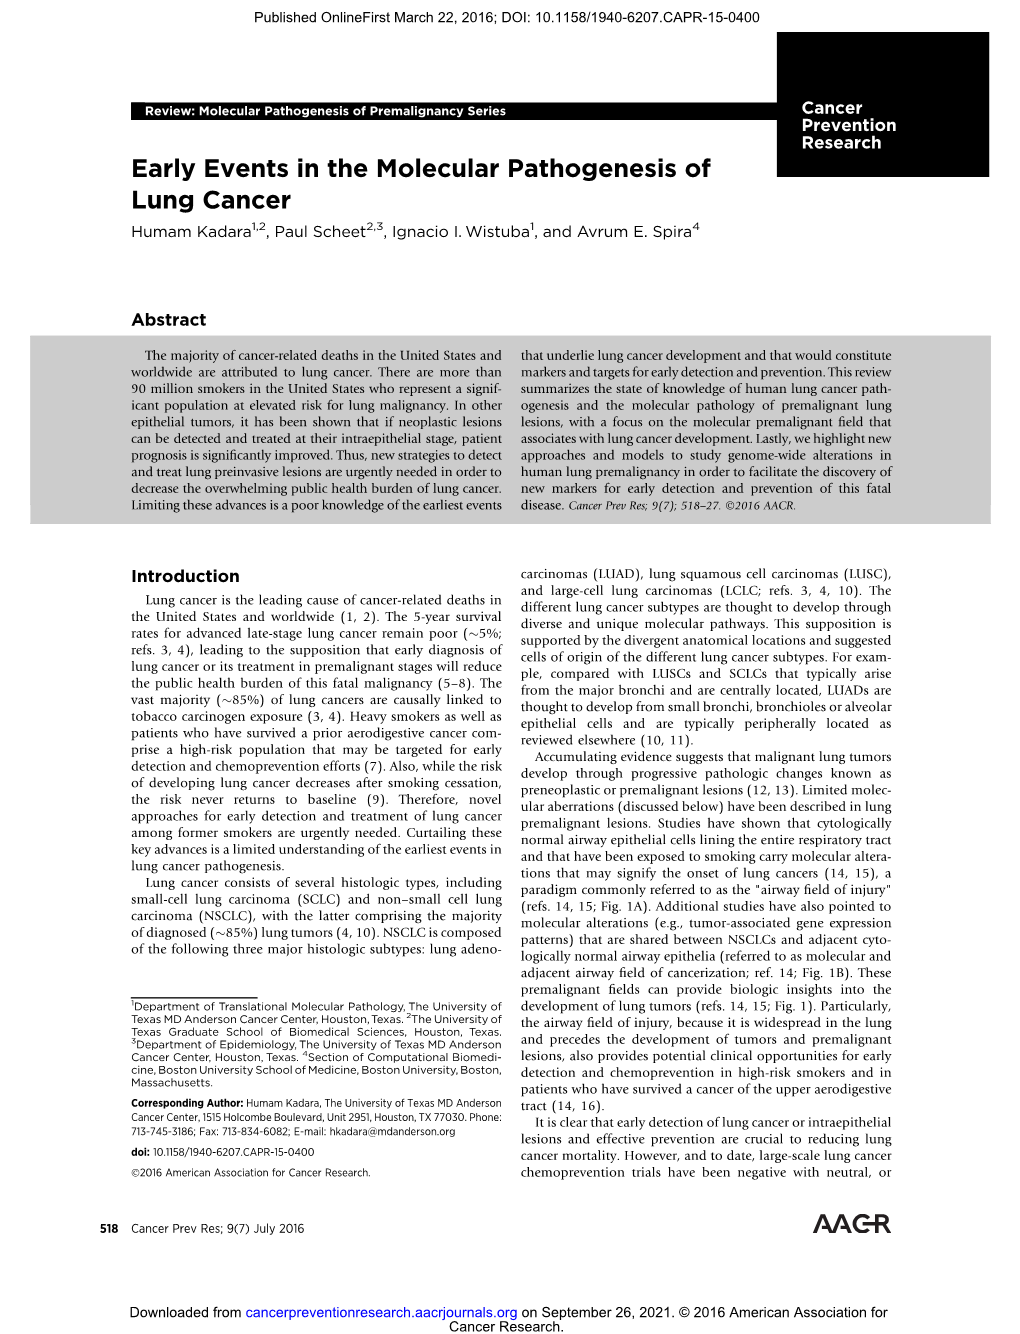 Early Events in the Molecular Pathogenesis of Lung Cancer Humam Kadara1,2, Paul Scheet2,3, Ignacio I